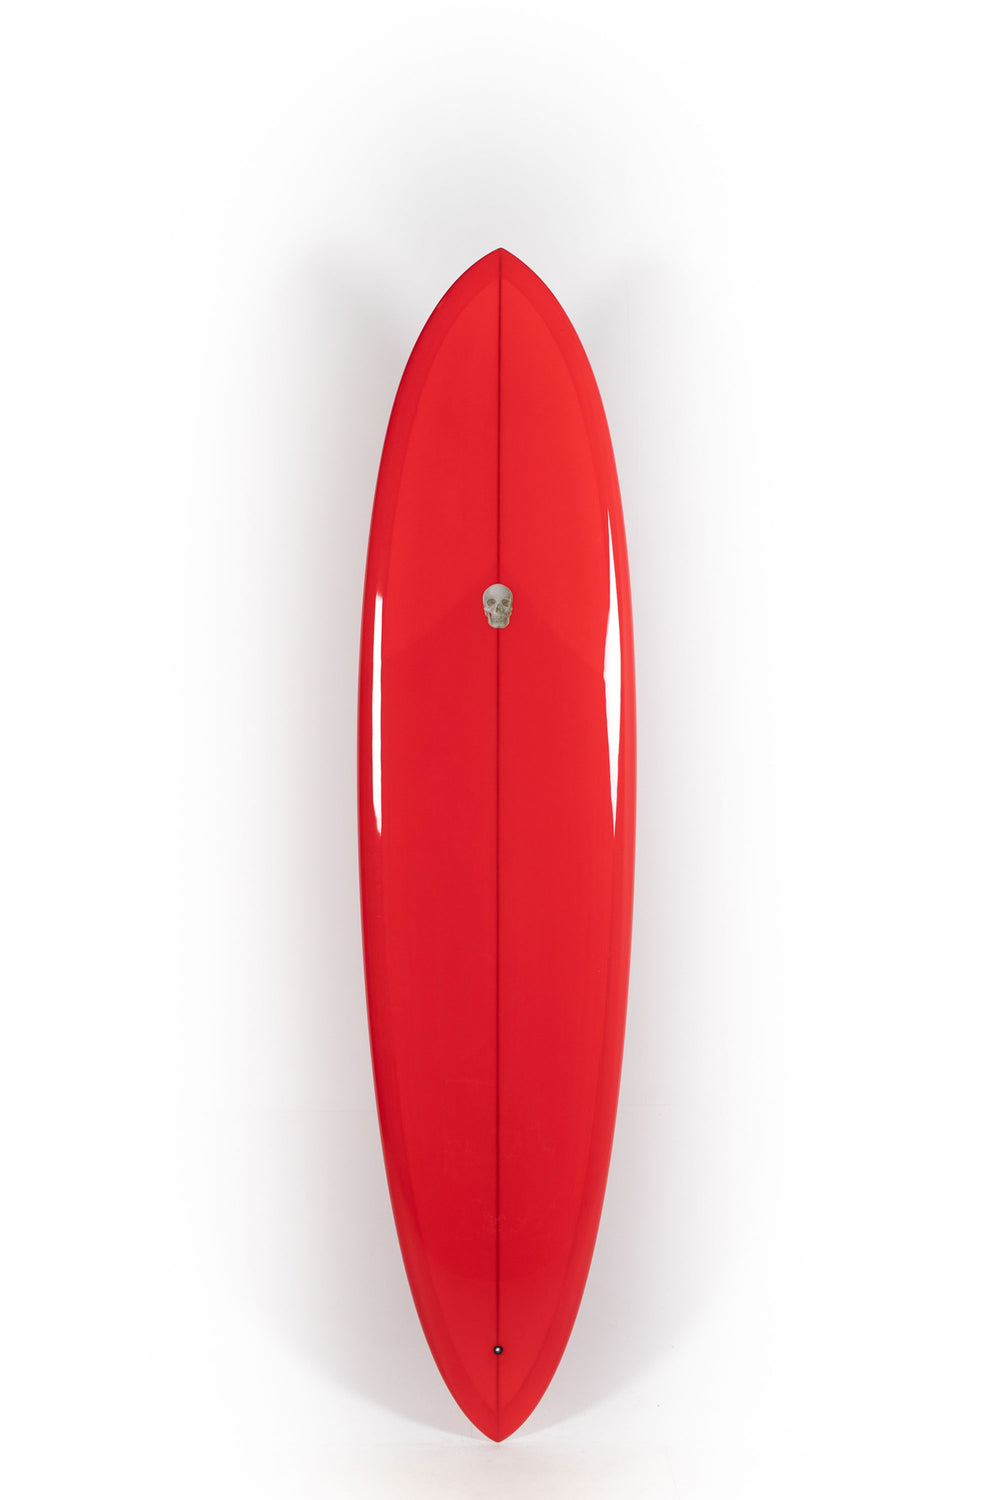 Pukas Surf Shop - Christenson Surfboards - C-BUCKET - 7'6